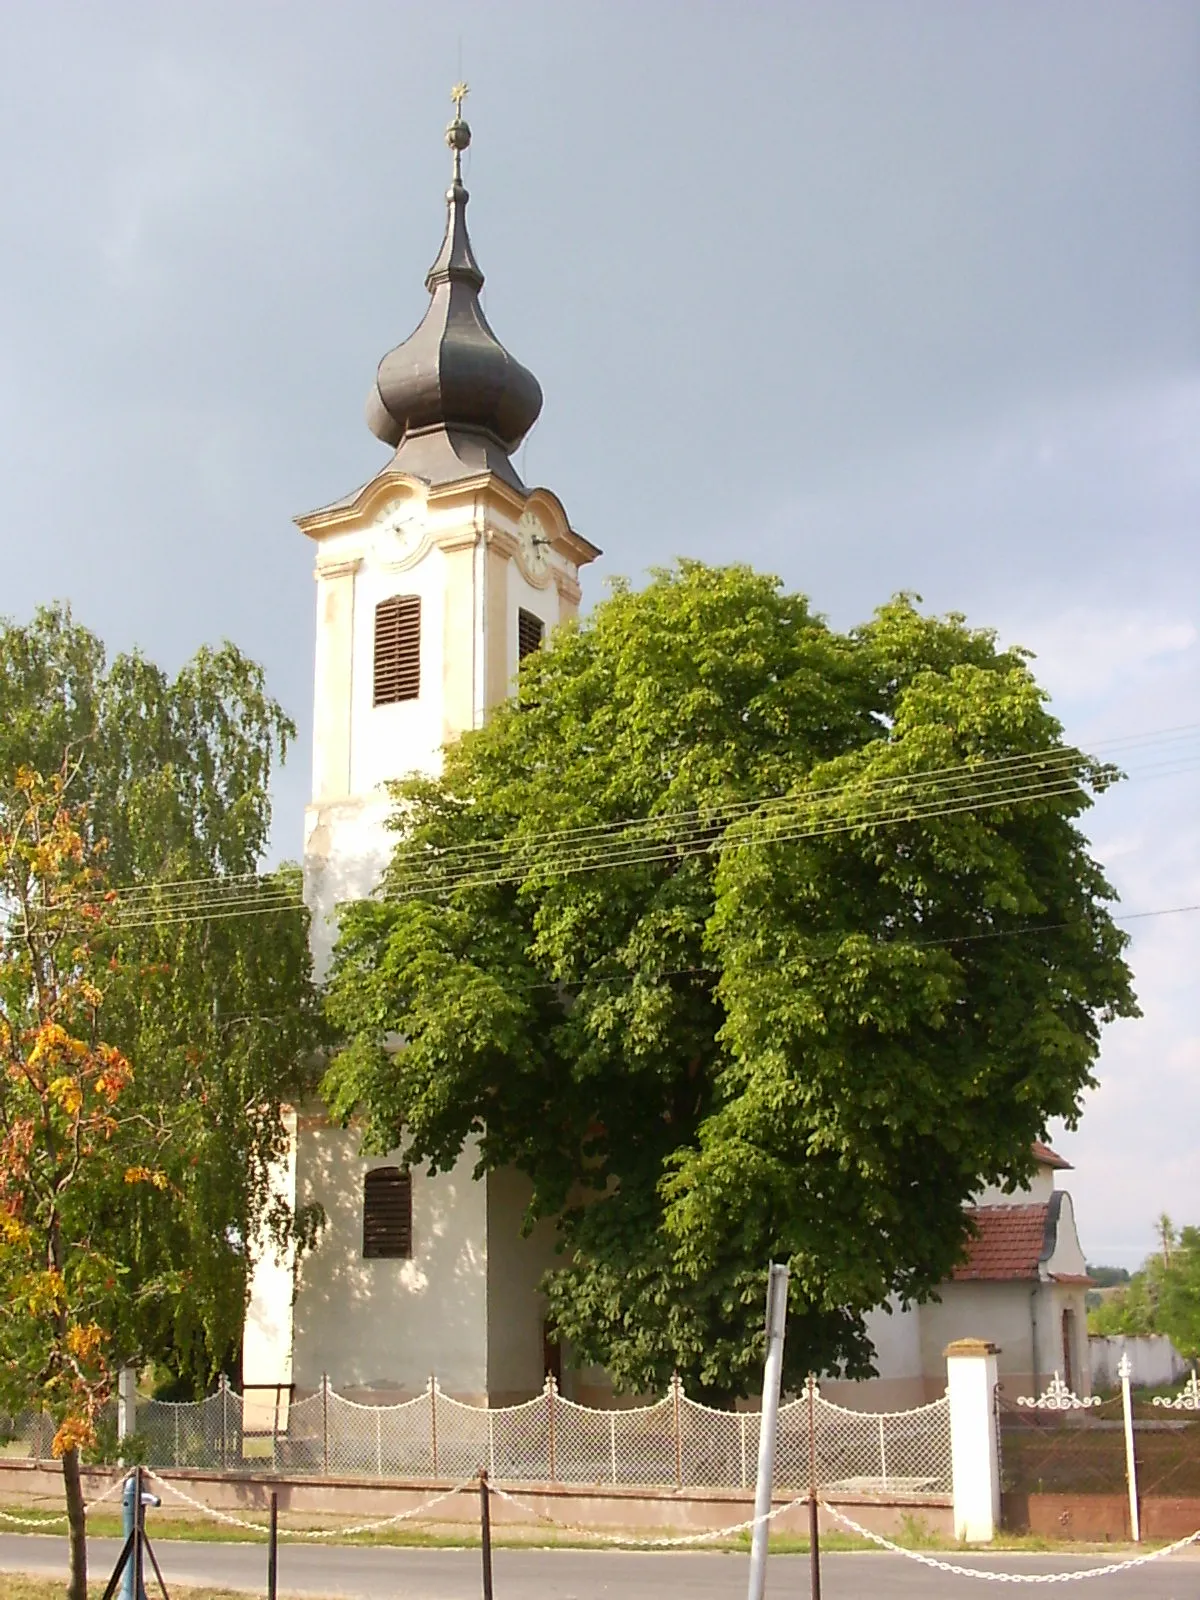 Image of Nyugat-Dunántúl